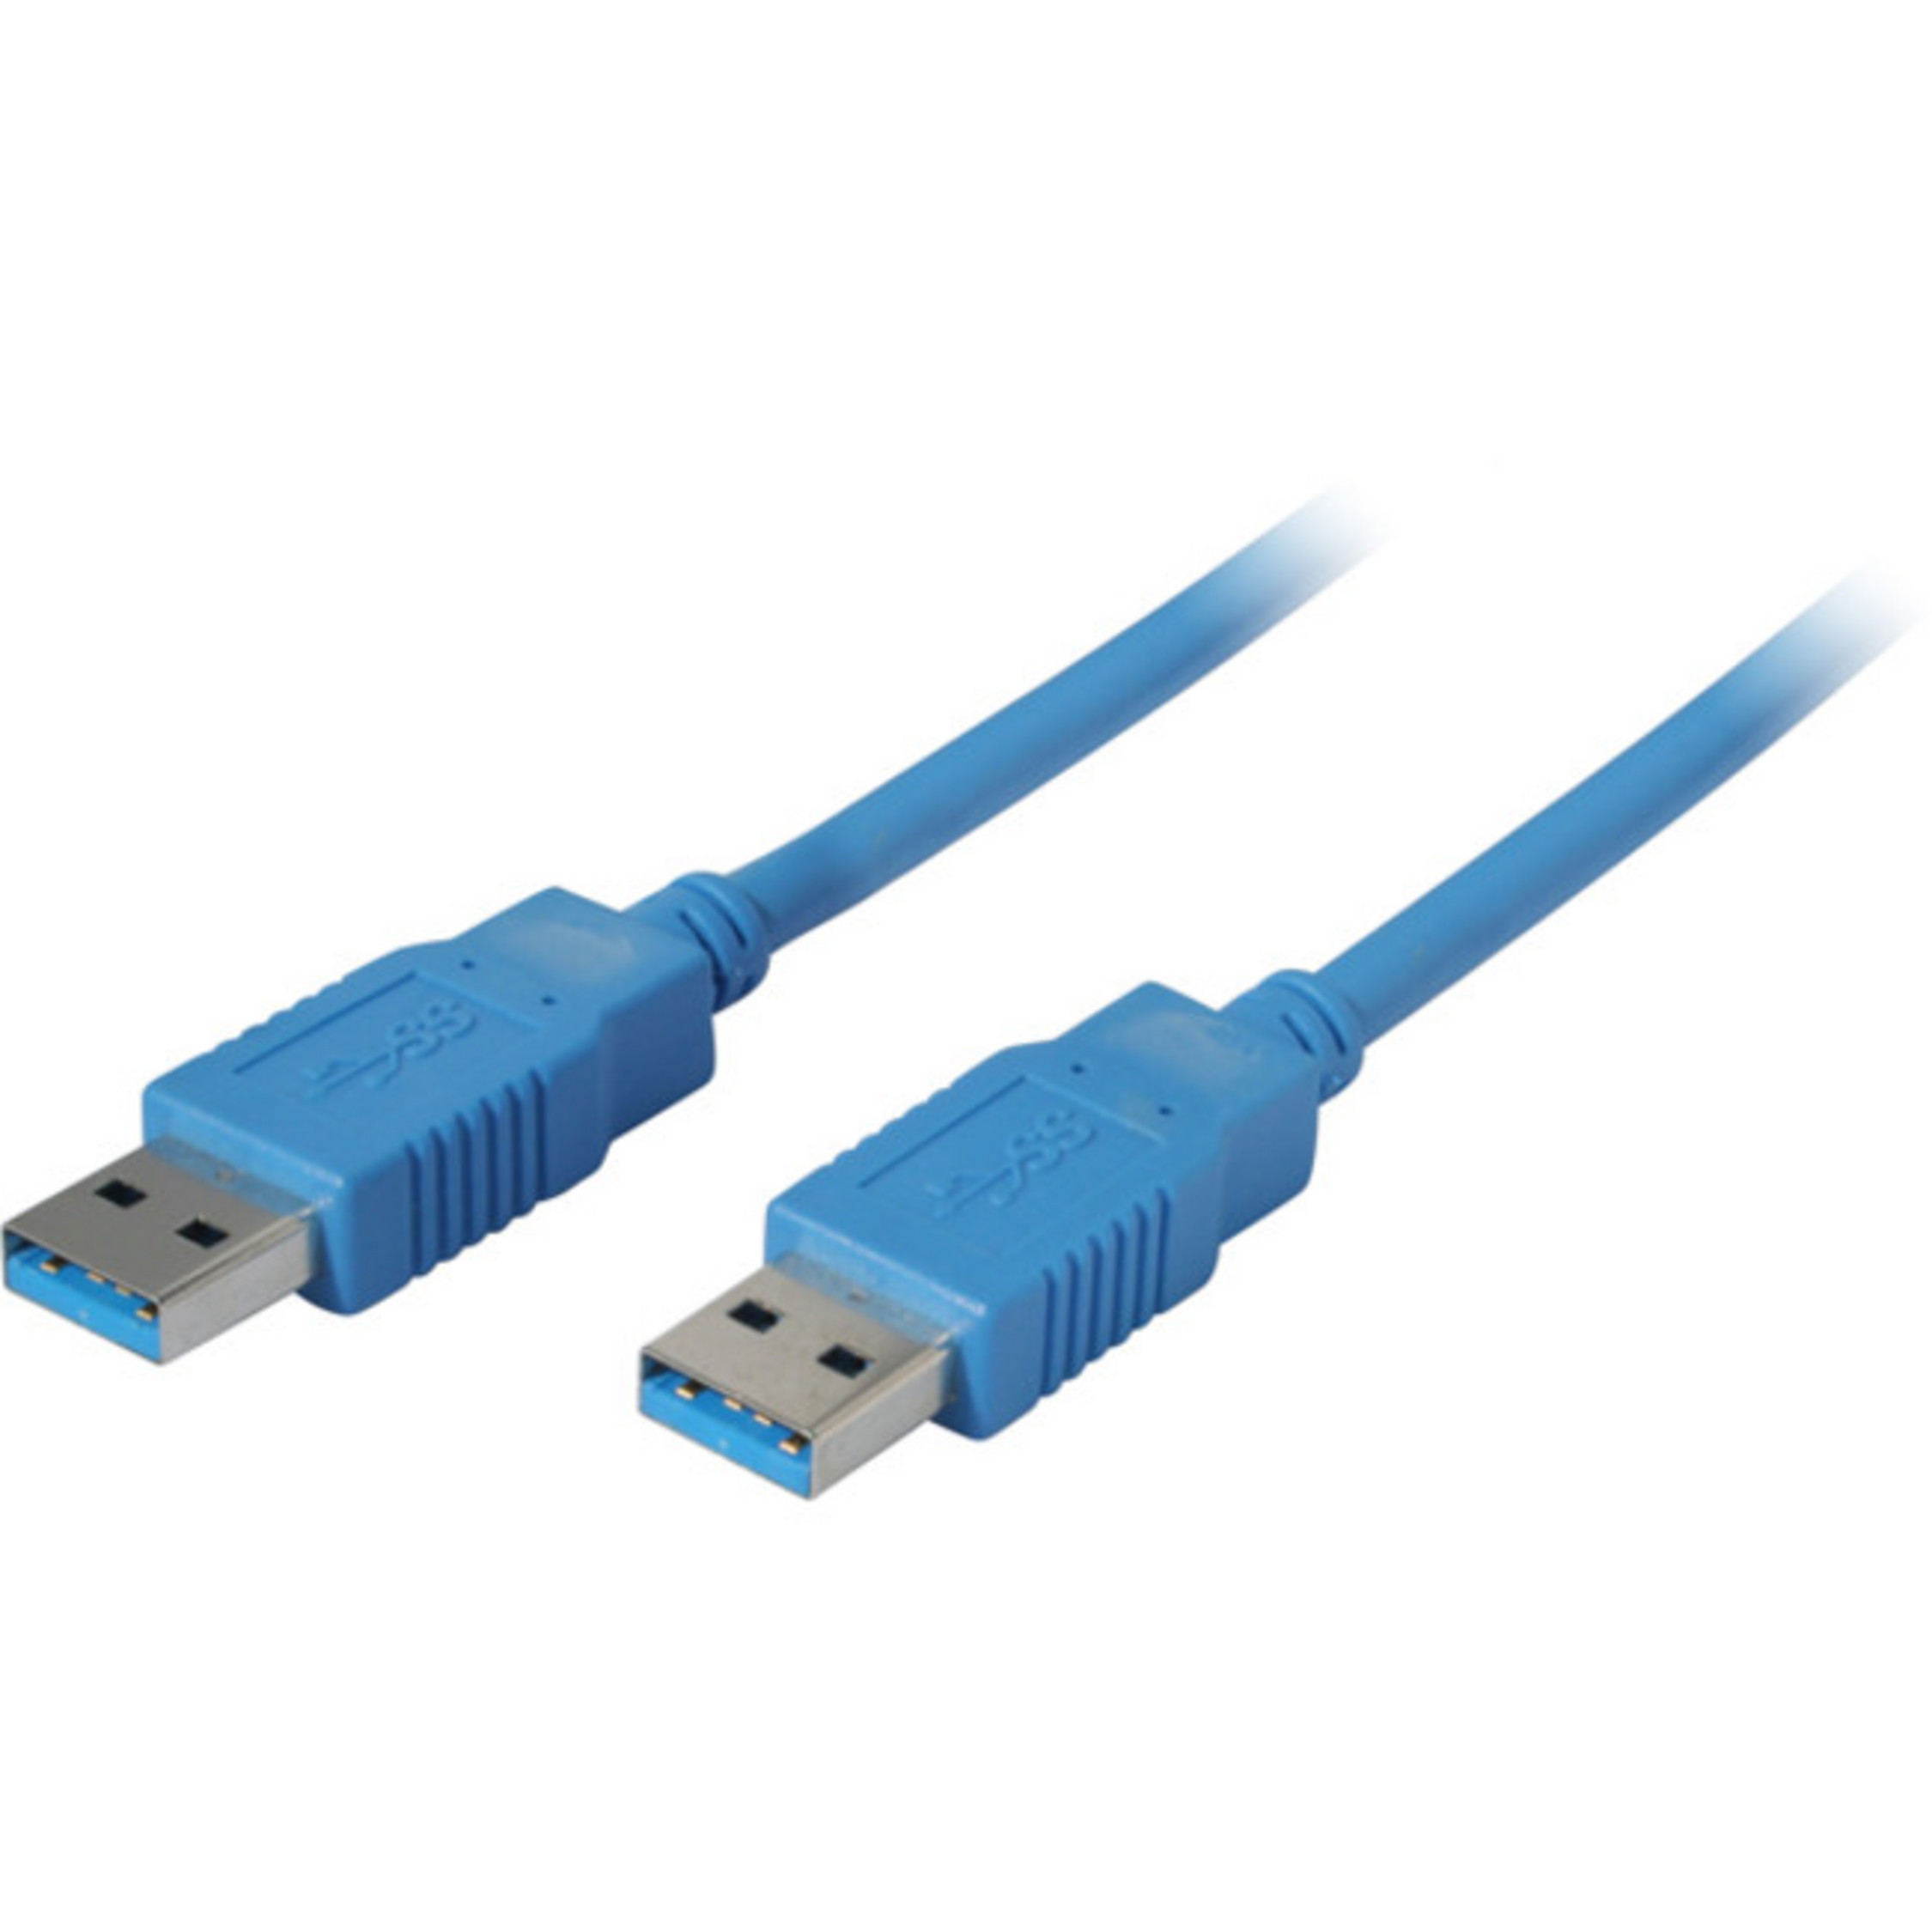 CONNECTIVITY blau 3.0 1m MAXIMUM Kabel A USB Kabel / USB USB S/CONN A Stecker Stecker